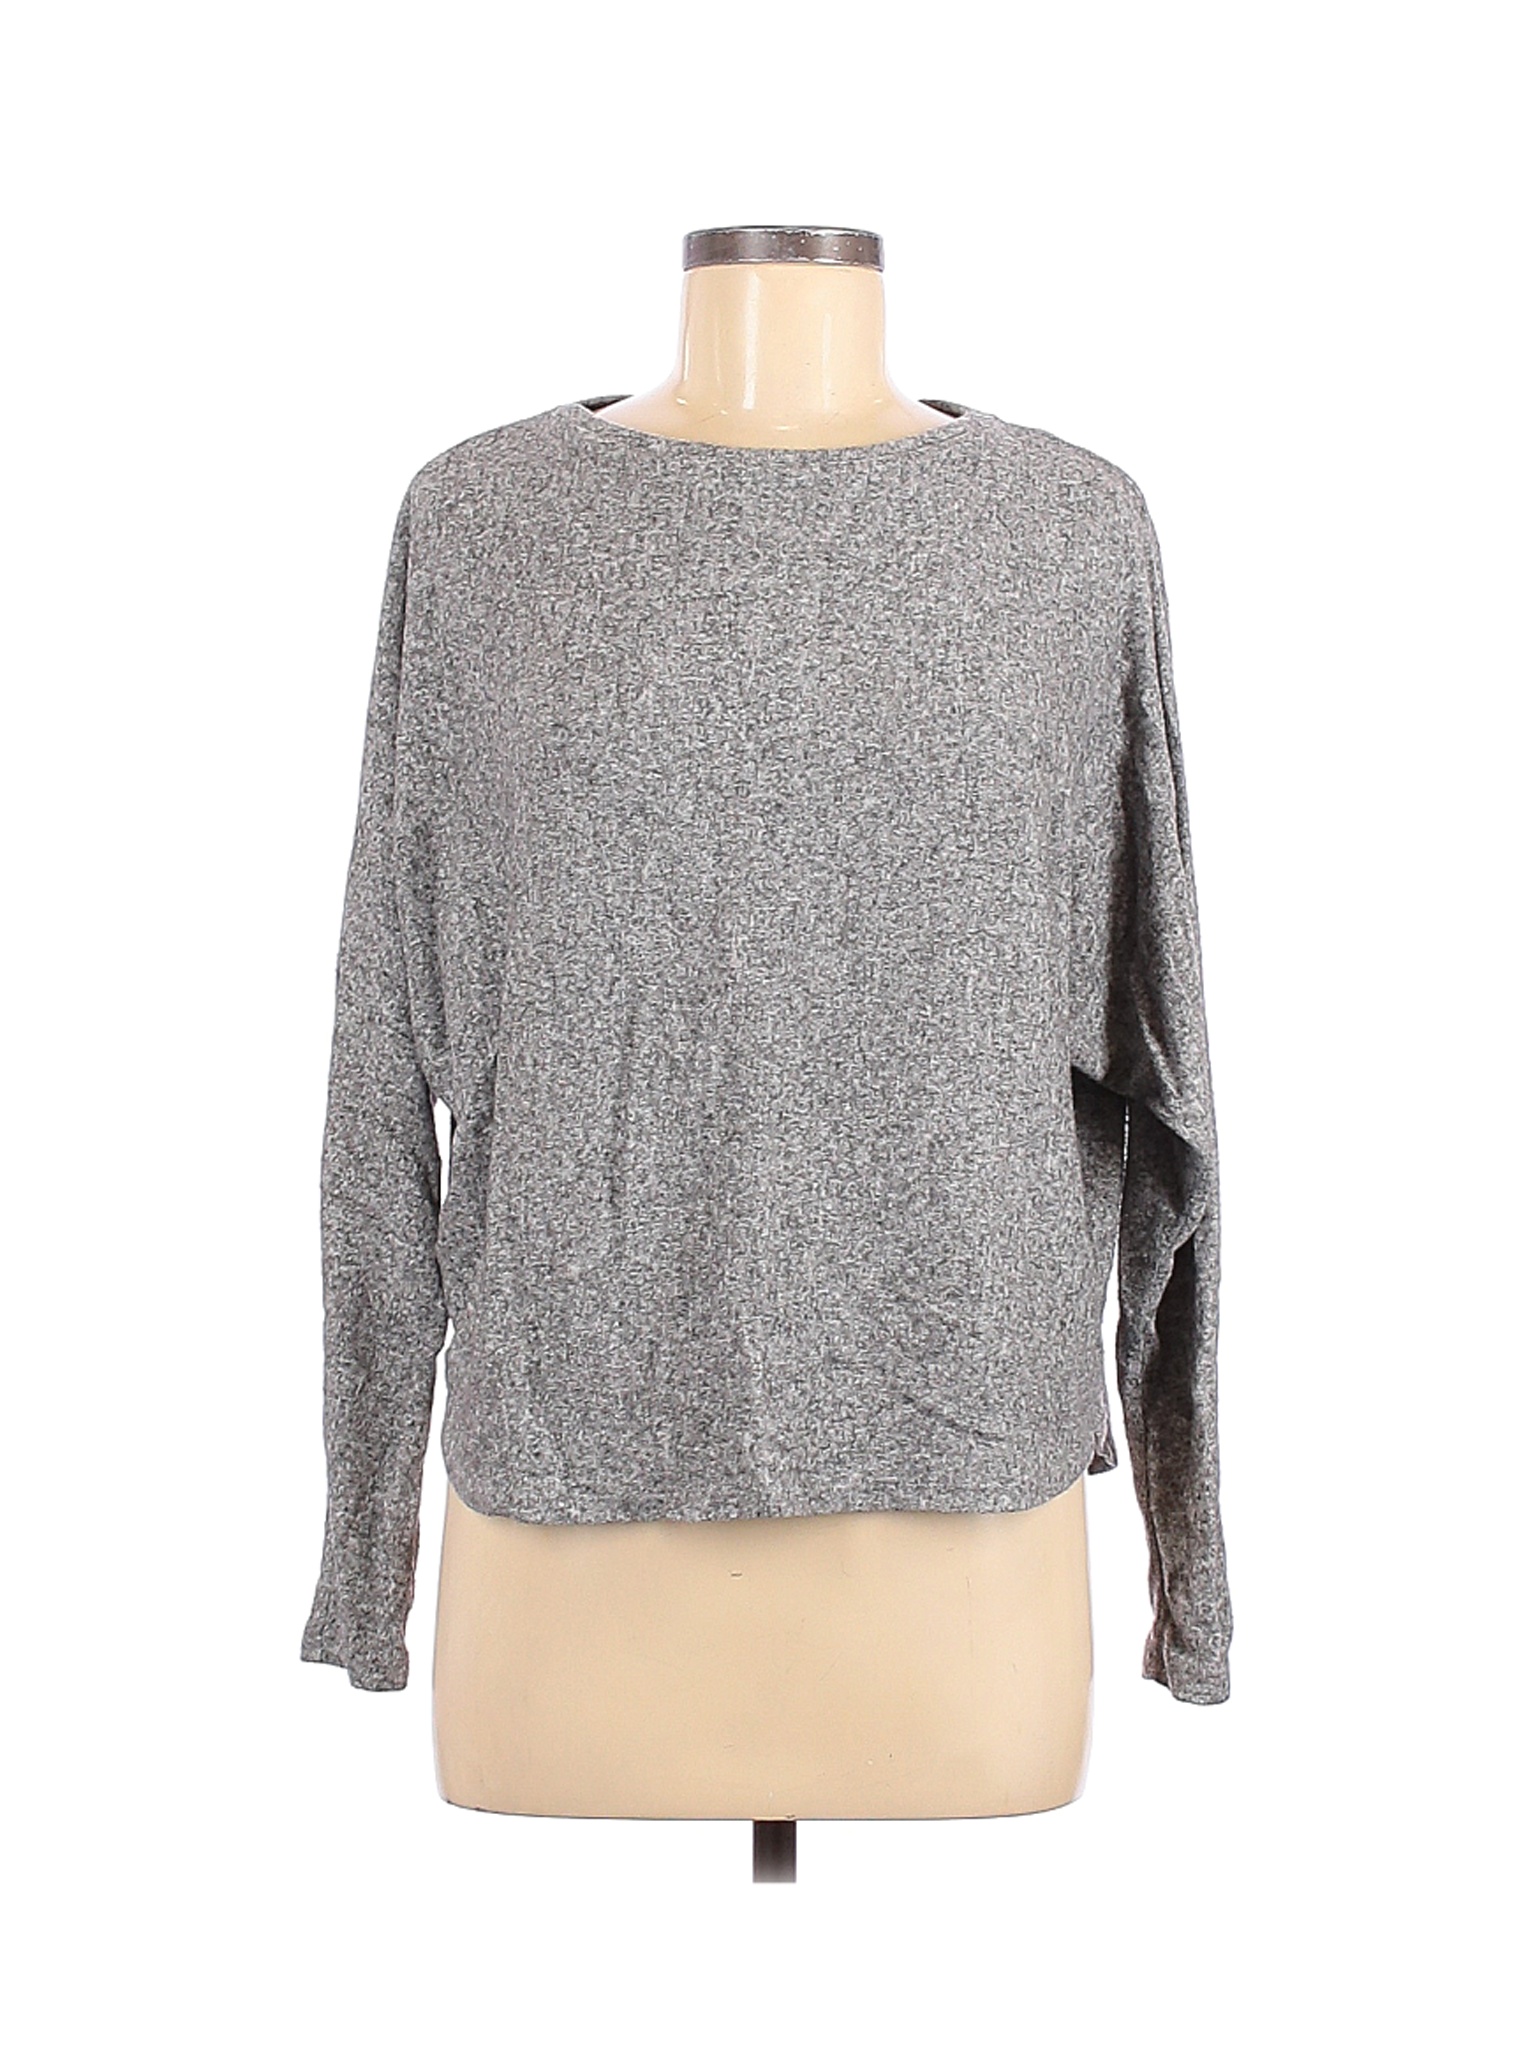 H&M L.O.G.G. Women Gray Pullover Sweater S | eBay